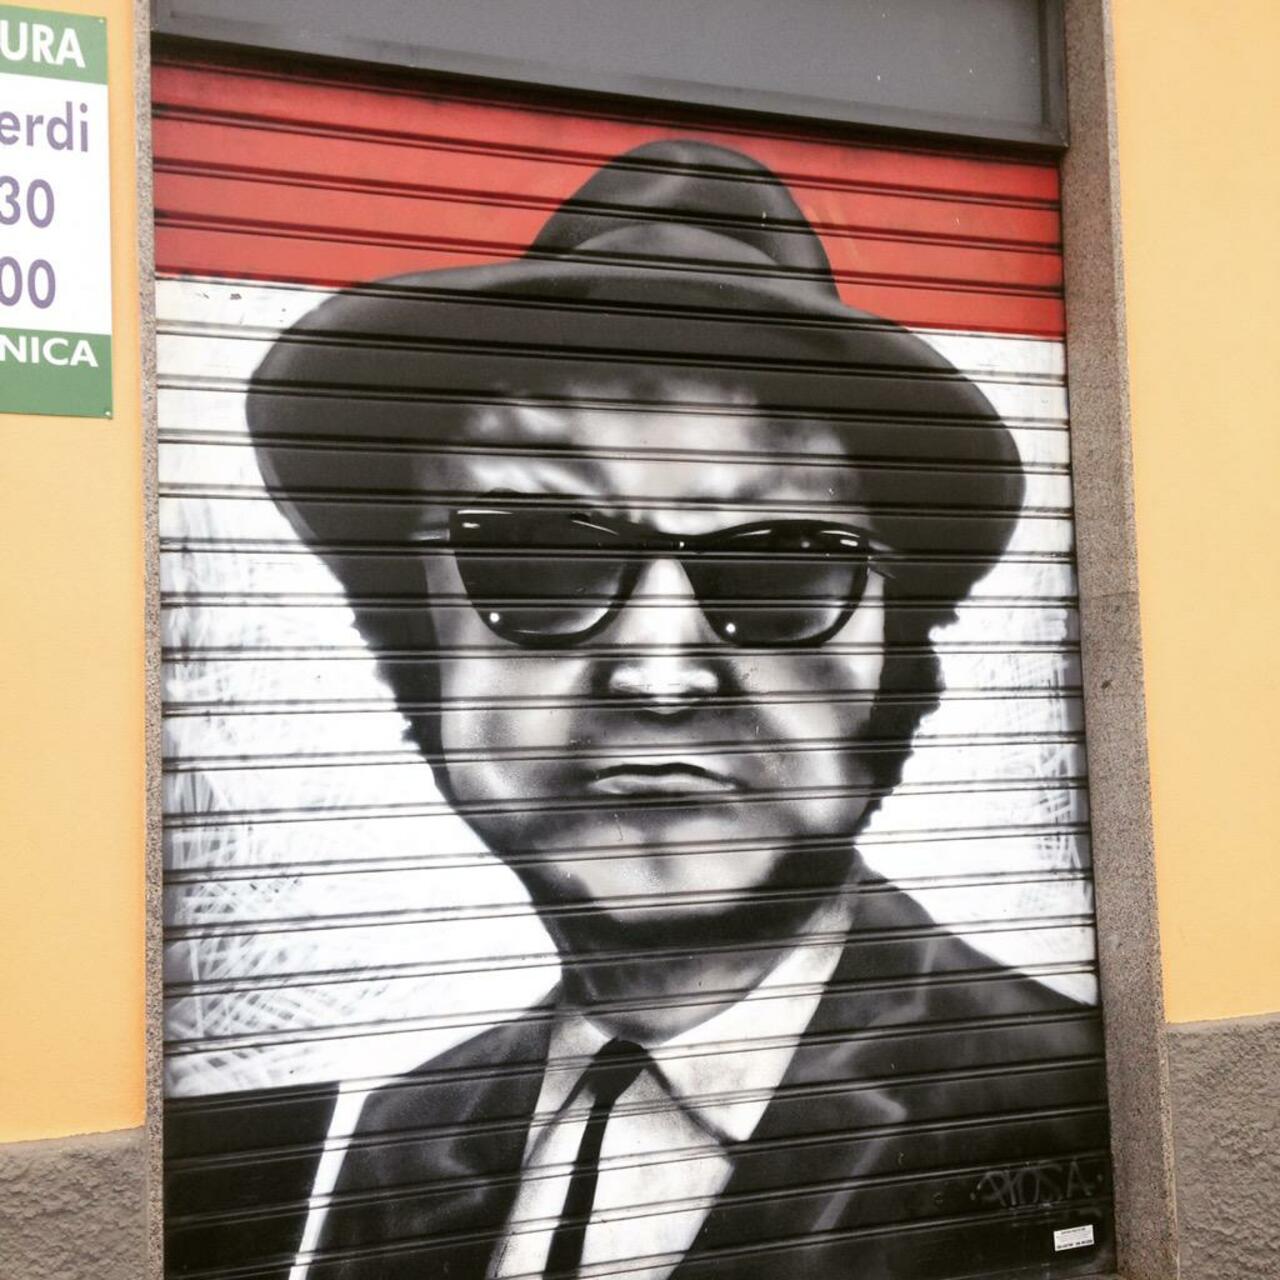 #streetart #milano #graffiti #graffitiart http://t.co/awmxANlbj2